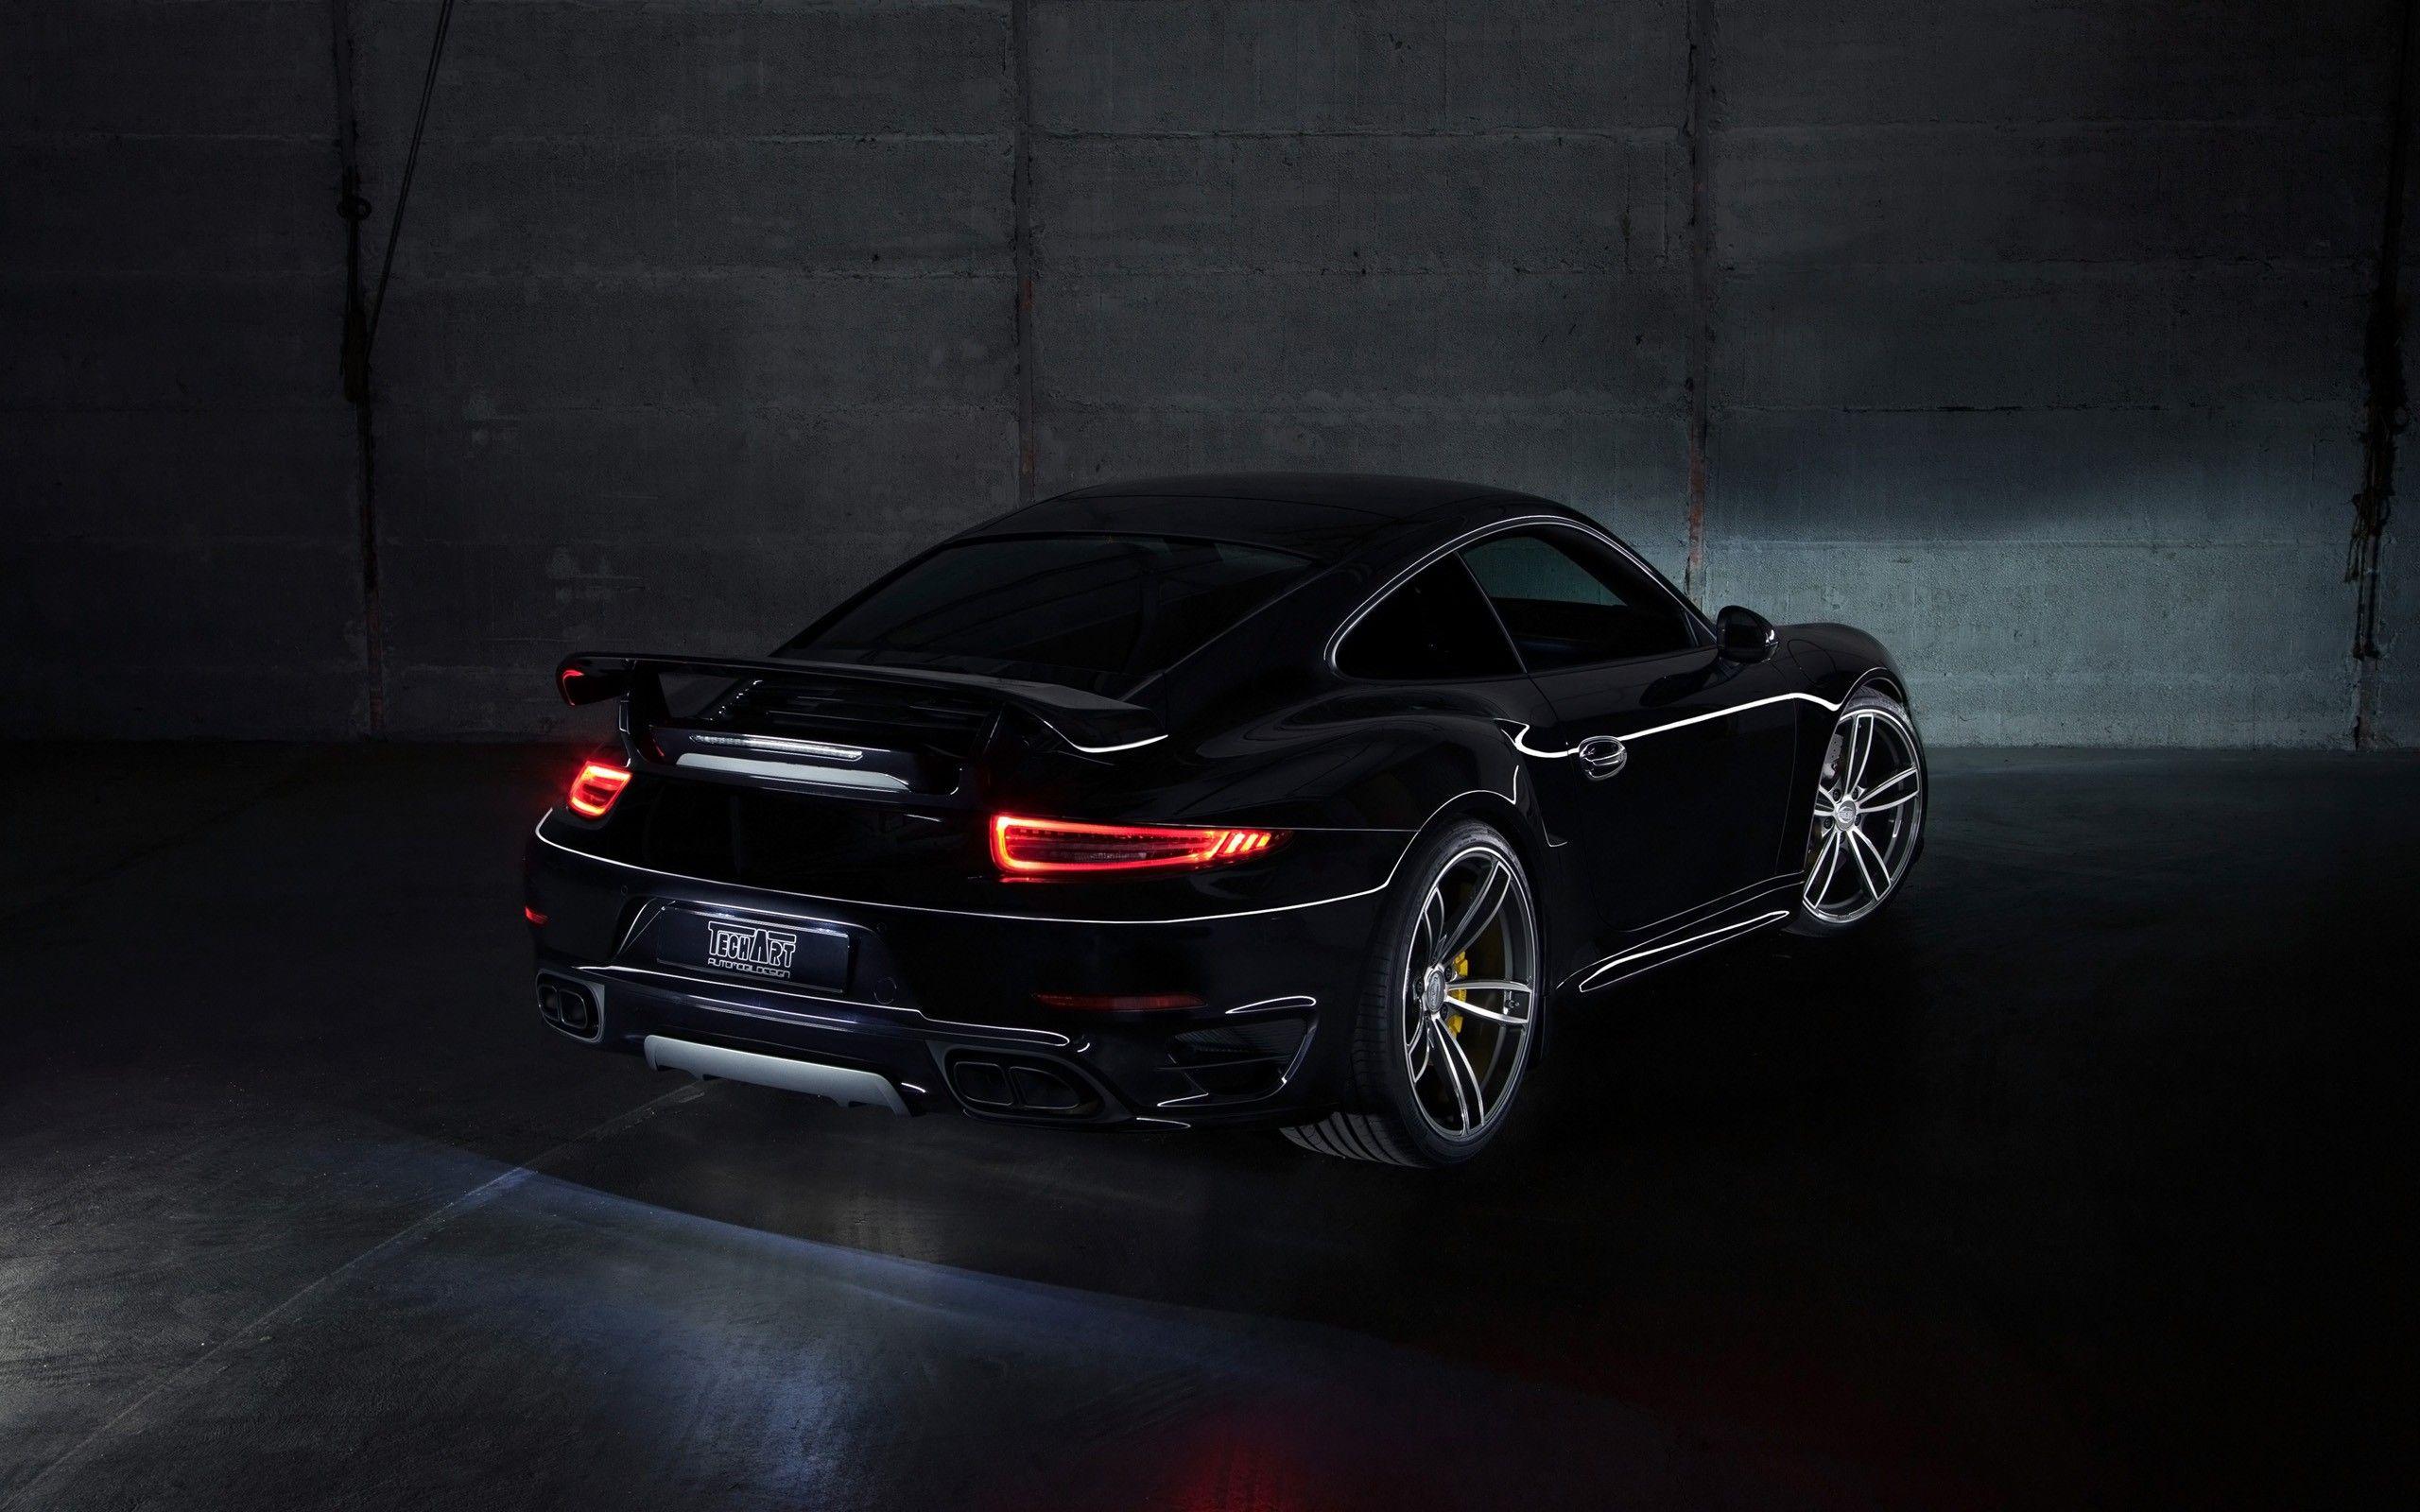 Black Porsche Wallpapers - Top Free Black Porsche Backgrounds